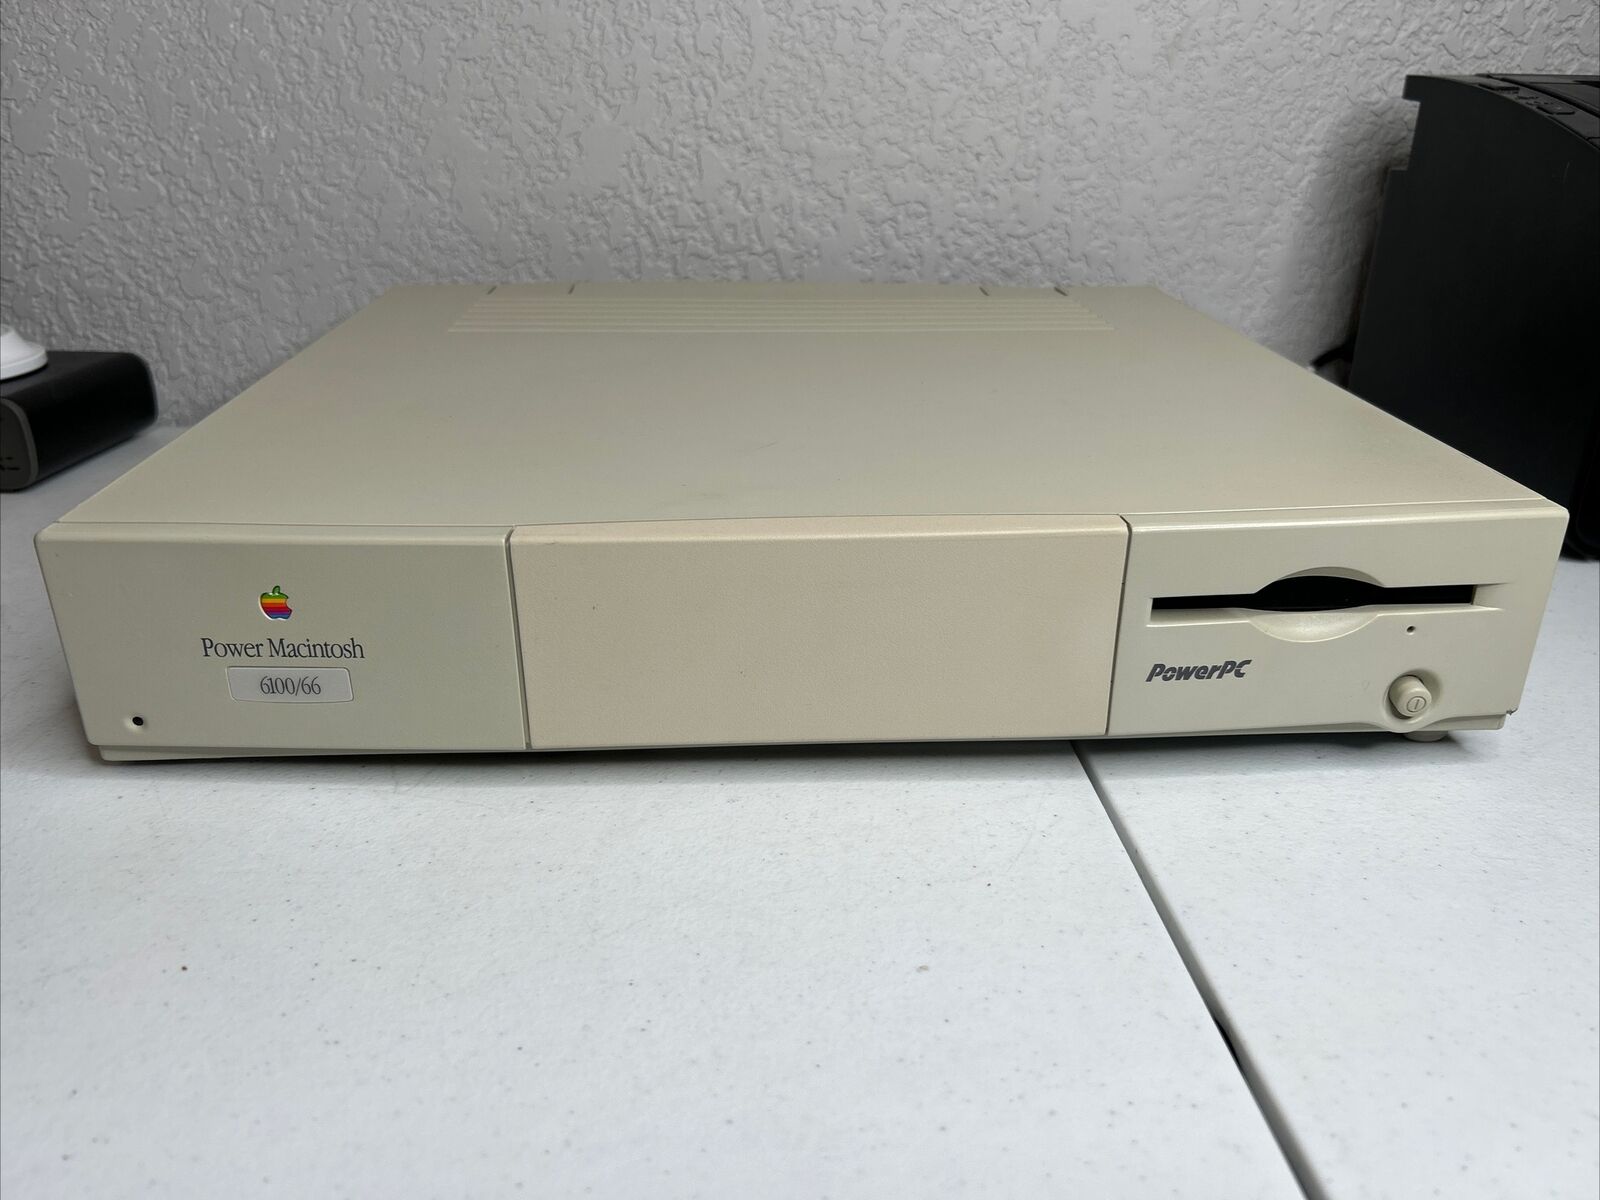 Vintage Apple Power Macintosh 6100/66 Computer M1596 Powers On AS-IS